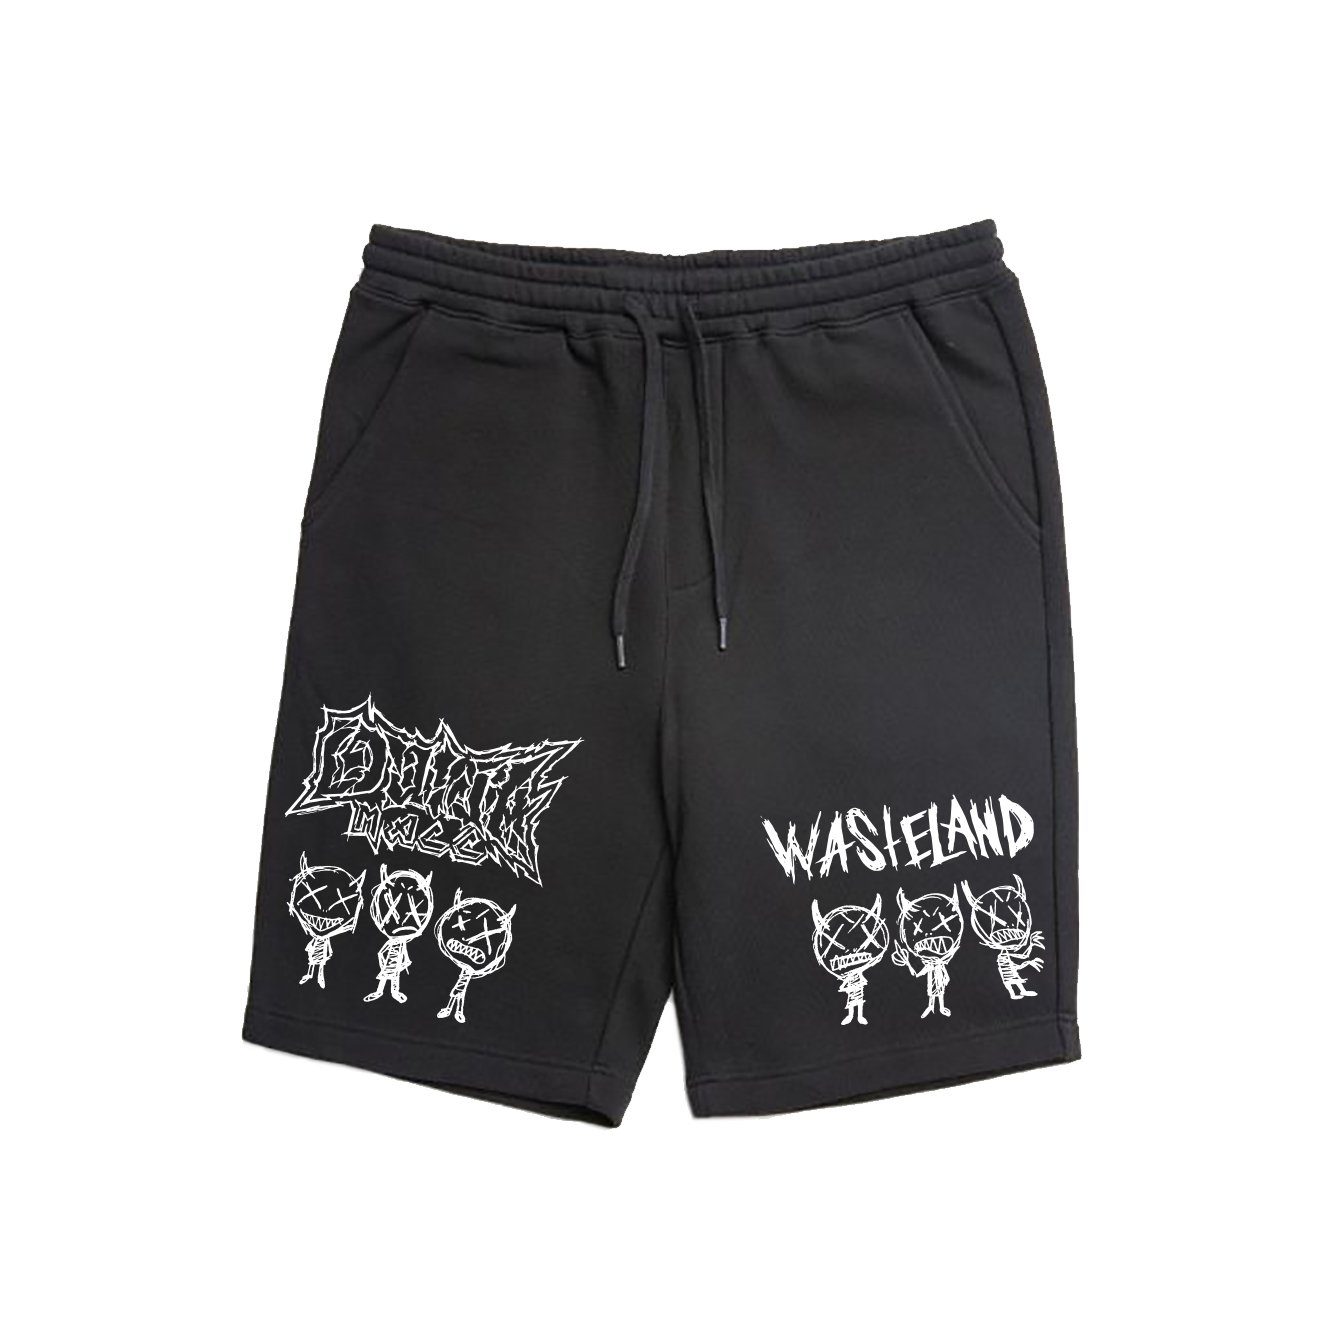 Wasteland Lil' Devils - Fleece shorts | ouijamaccshop